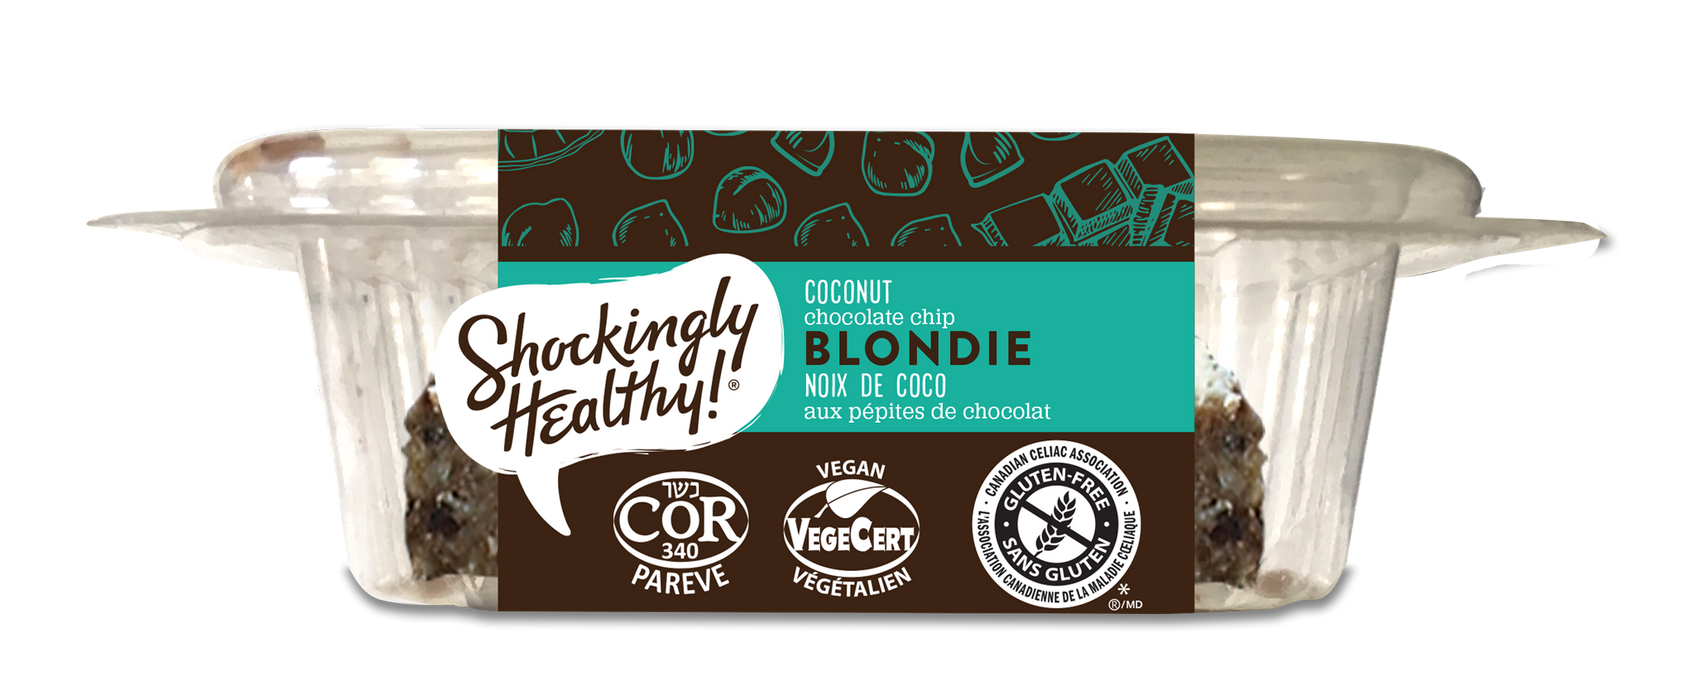 Shockingly Healthy! Gluten Free Coconut Chocolate Chip Blondie(70g)  **GTA ONLY**